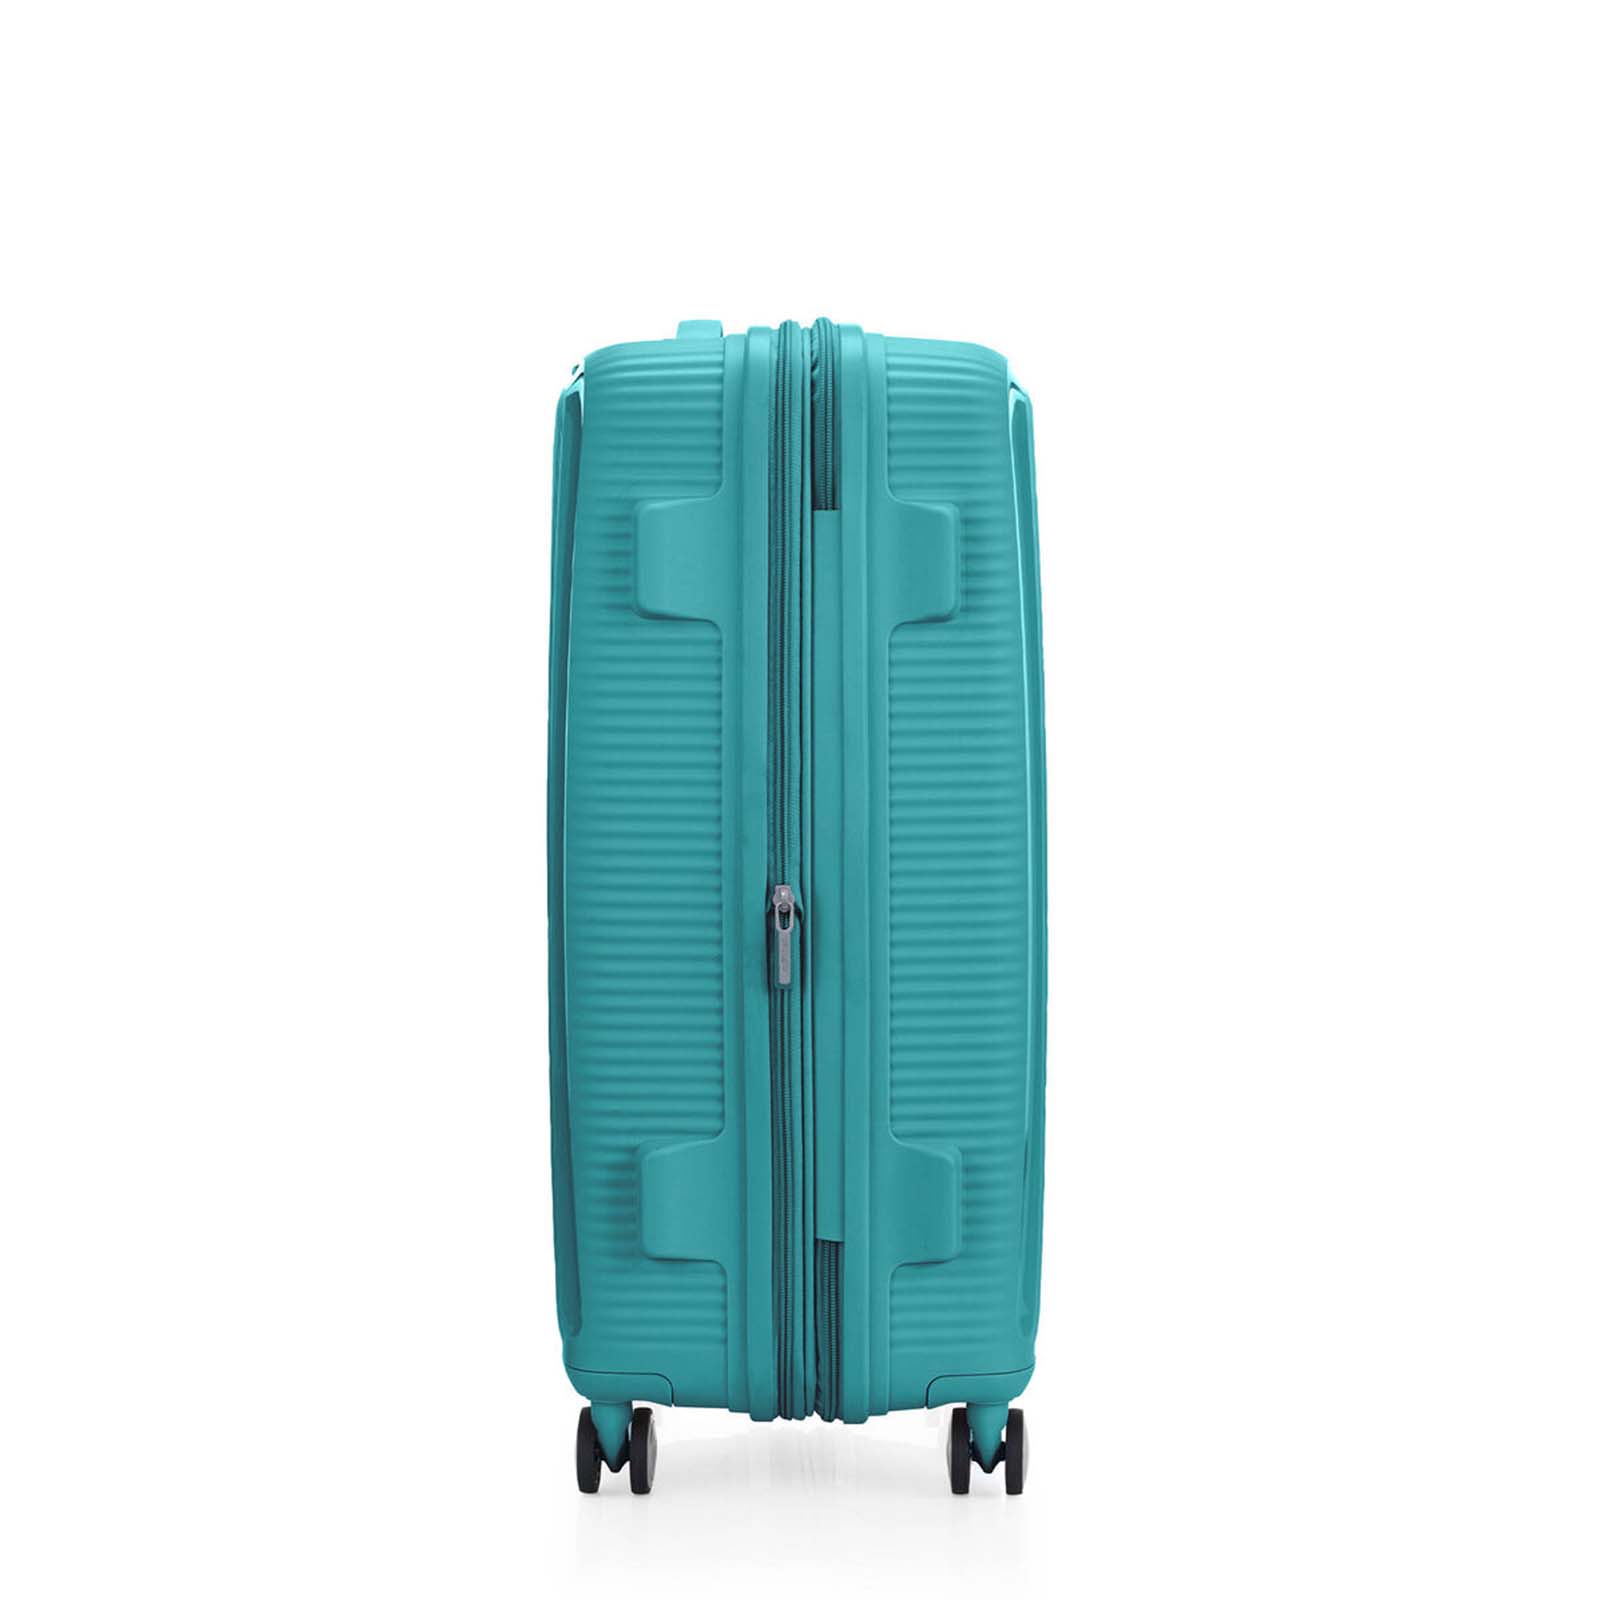 American-Tourister-Curio-2-69cm-Suitcase-Jade-Green-Side